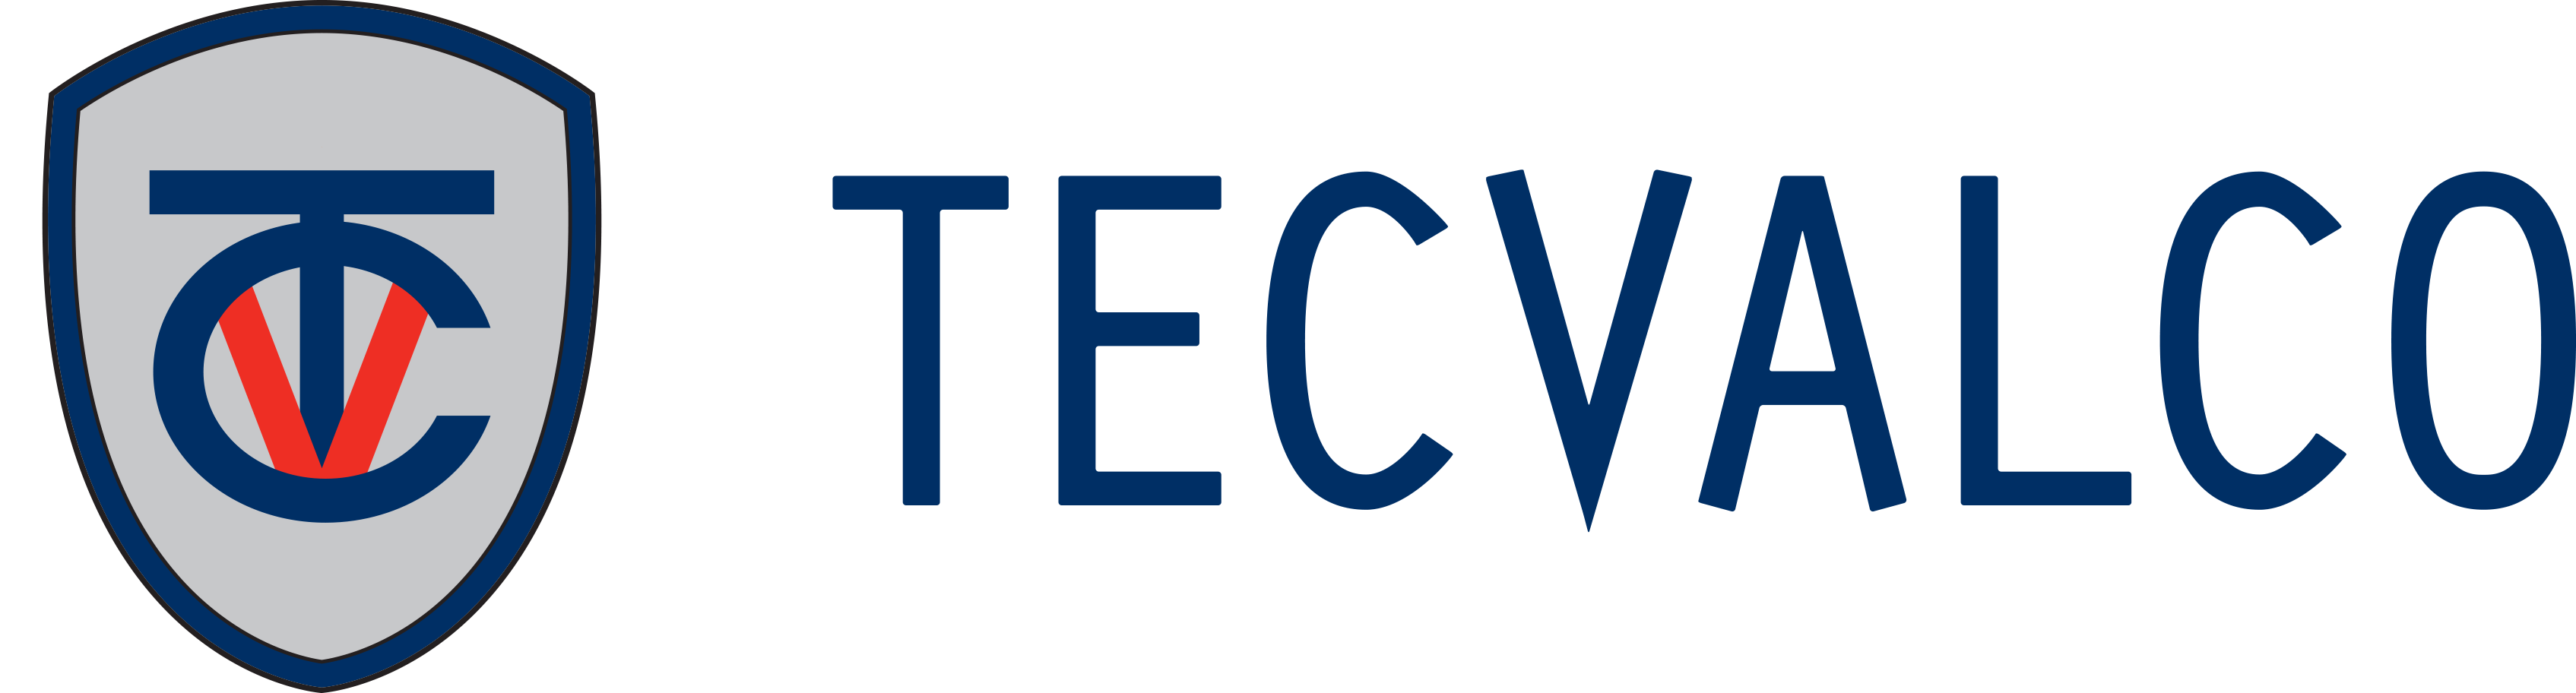 1802-tecvalco-logo-2017-horizontal-spot-colour-16442595601111.png